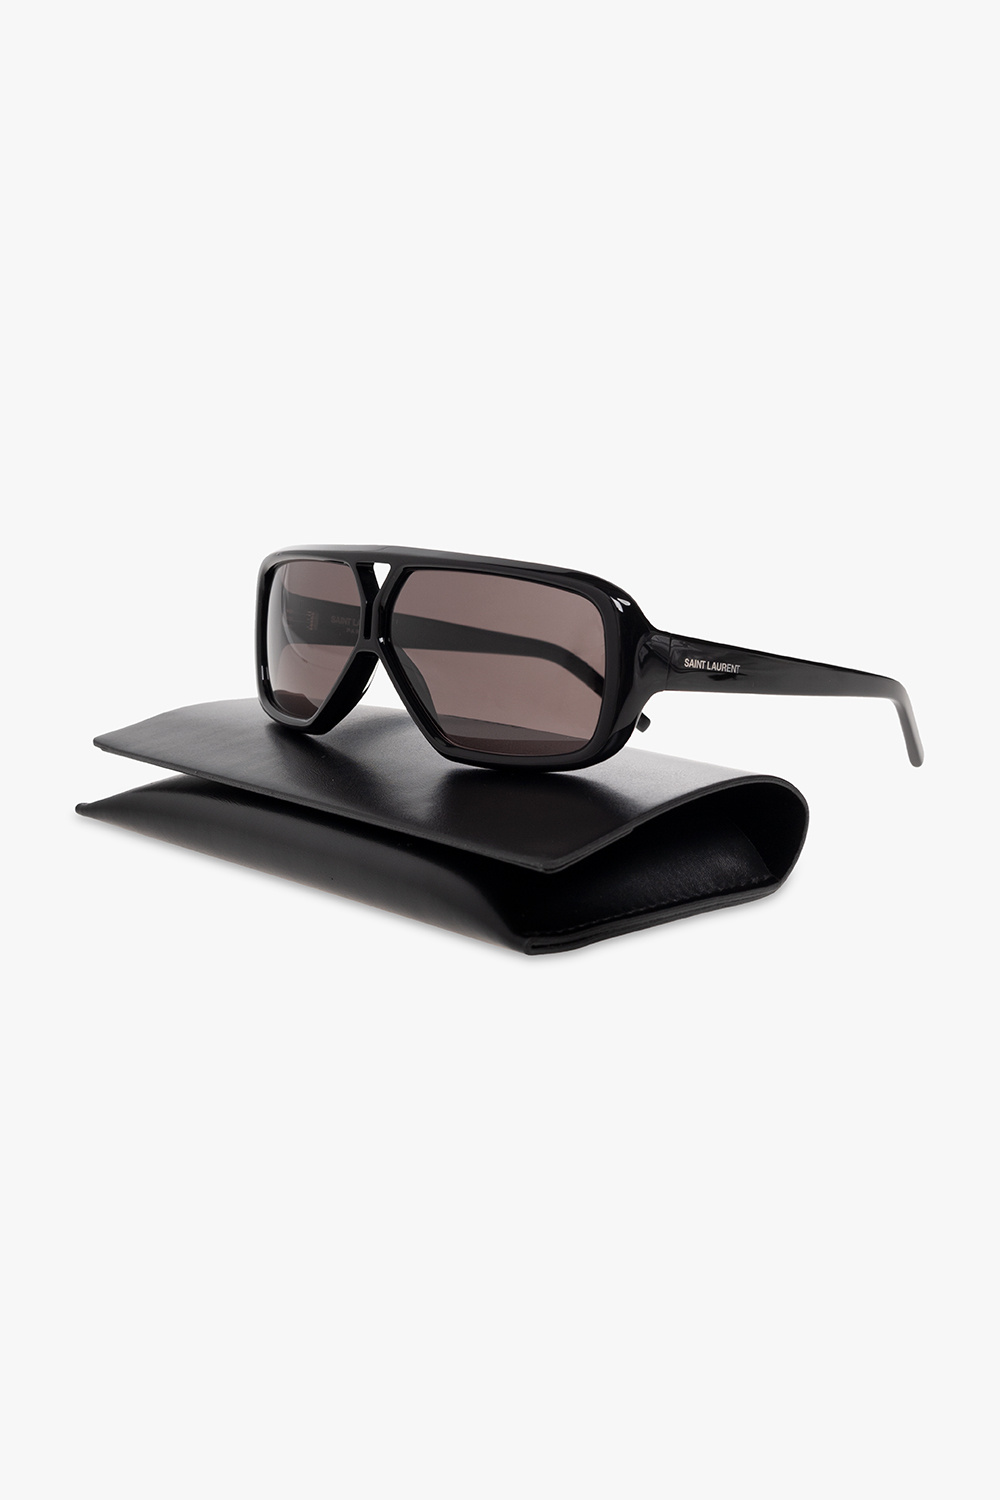 Saint Laurent ‘SL 569 Y’ sunglasses